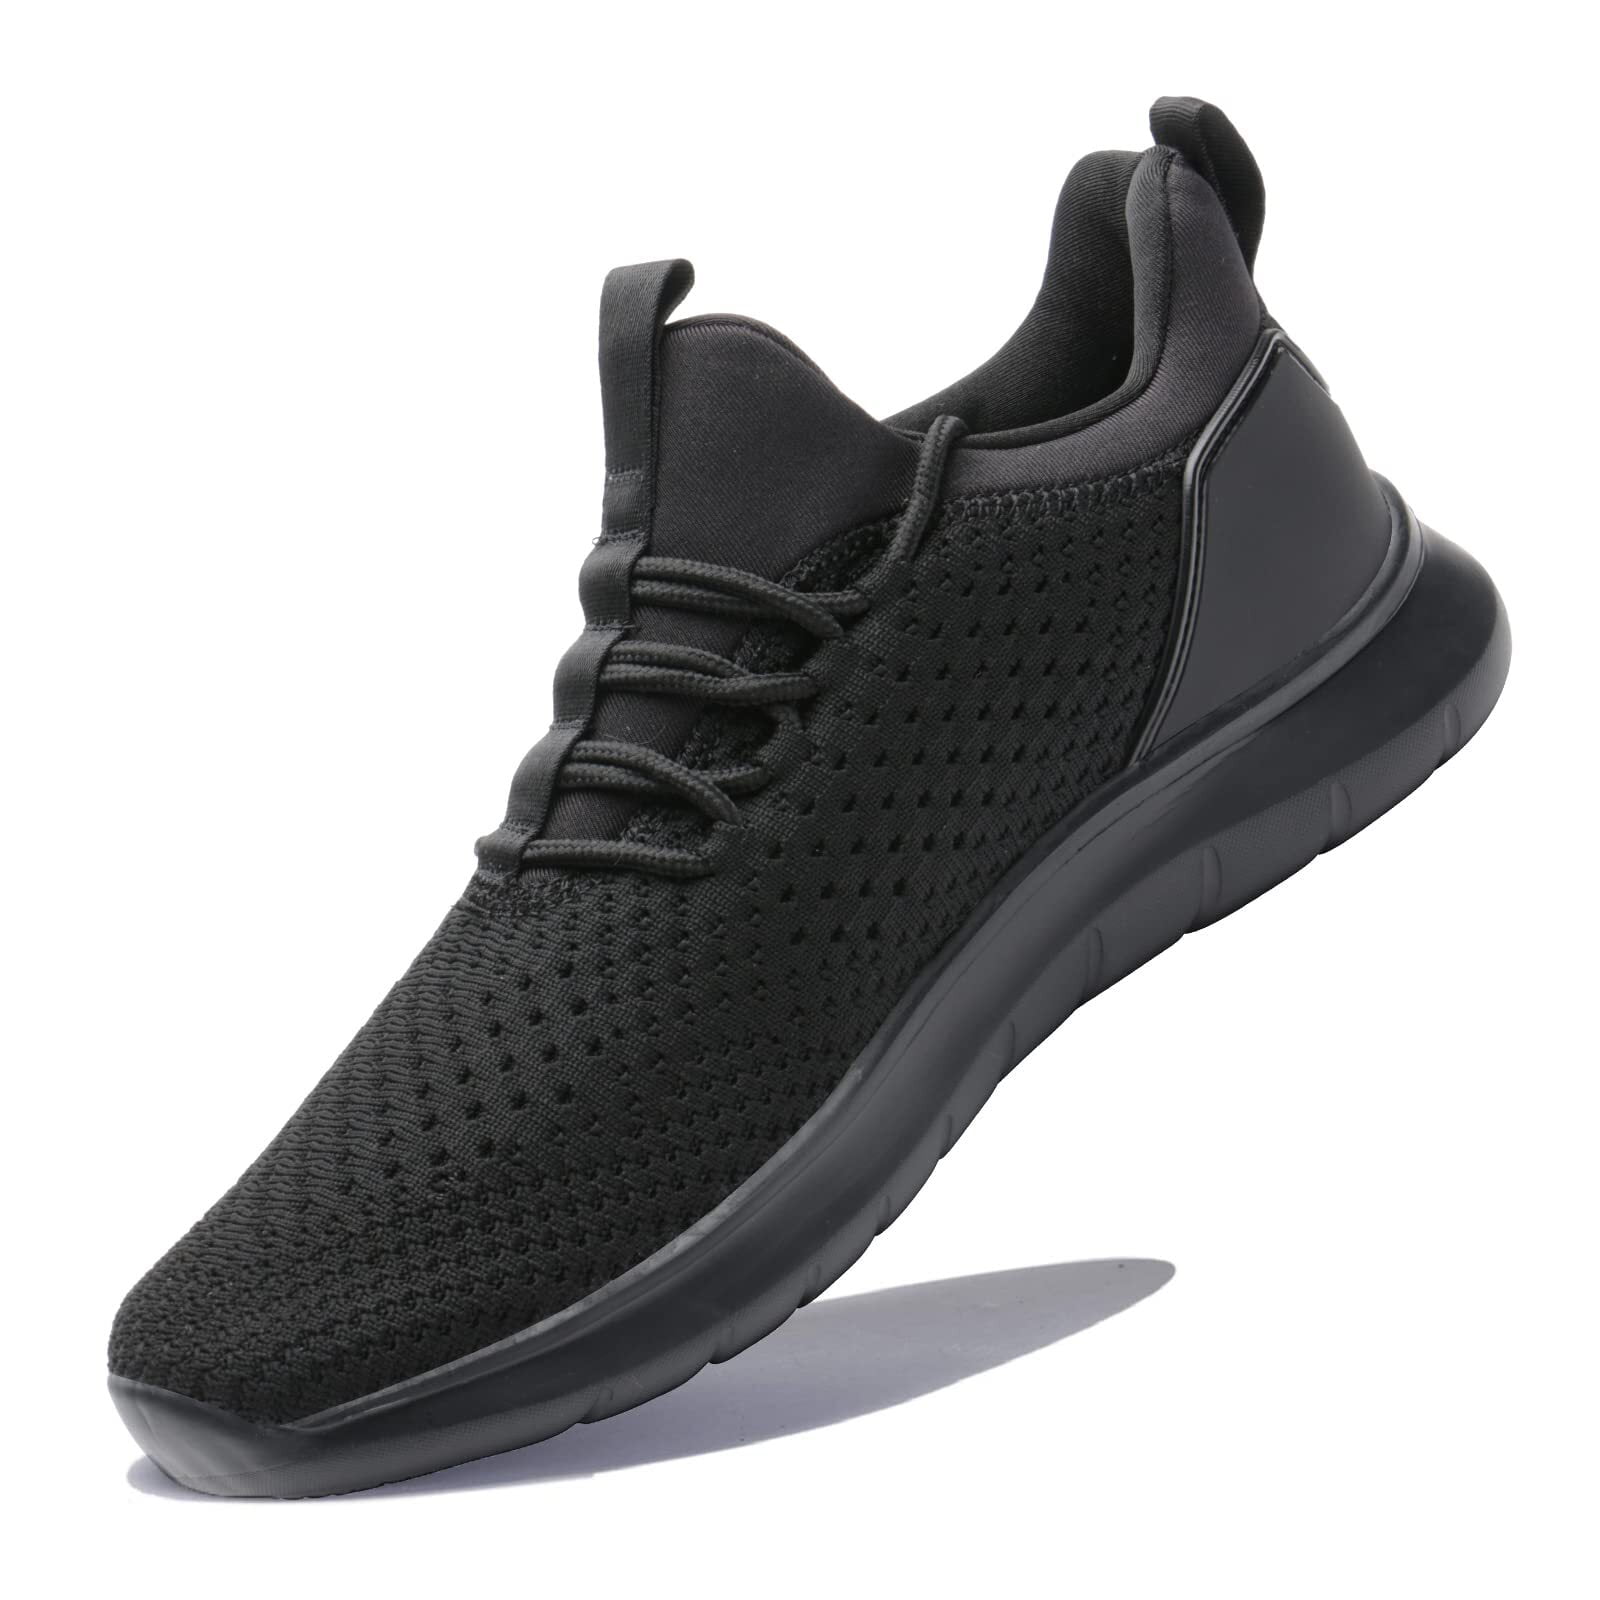 WOTTE Men's Athletic Walking Running Shoes Slip-on Casual Mesh Sneakers ...